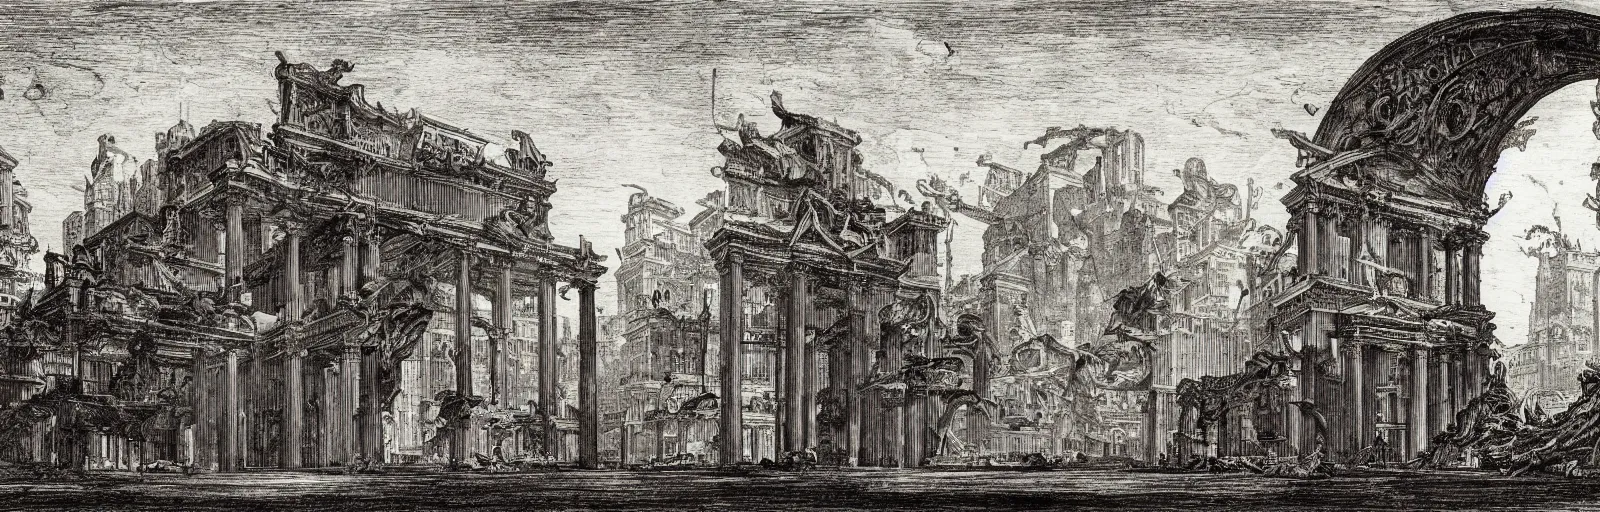 Image similar to a imaginative and theatrical architectural prison landscape, etching by giovanni battista piranesi